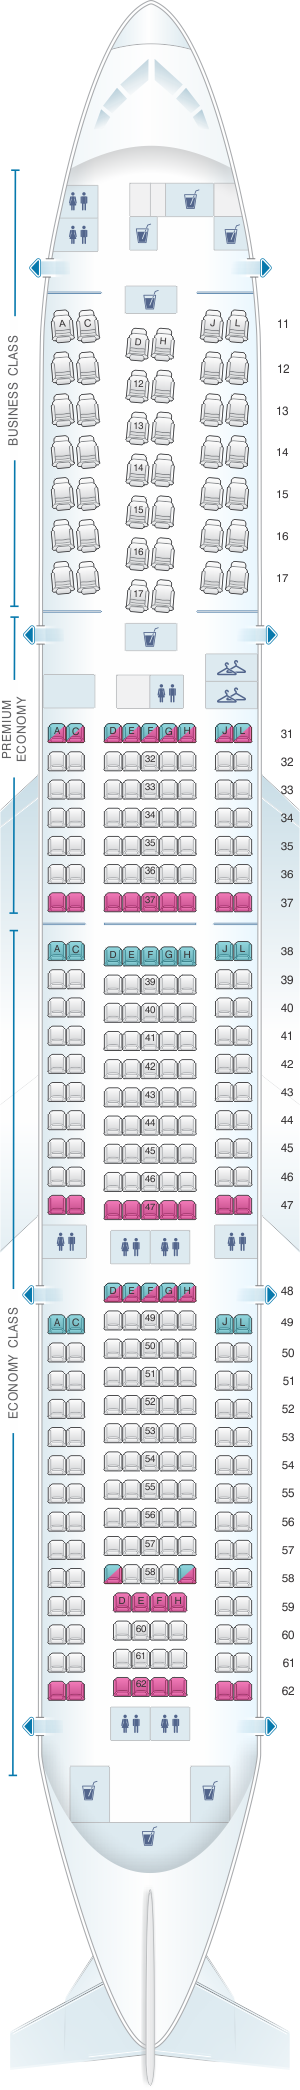 air china 777 seat size